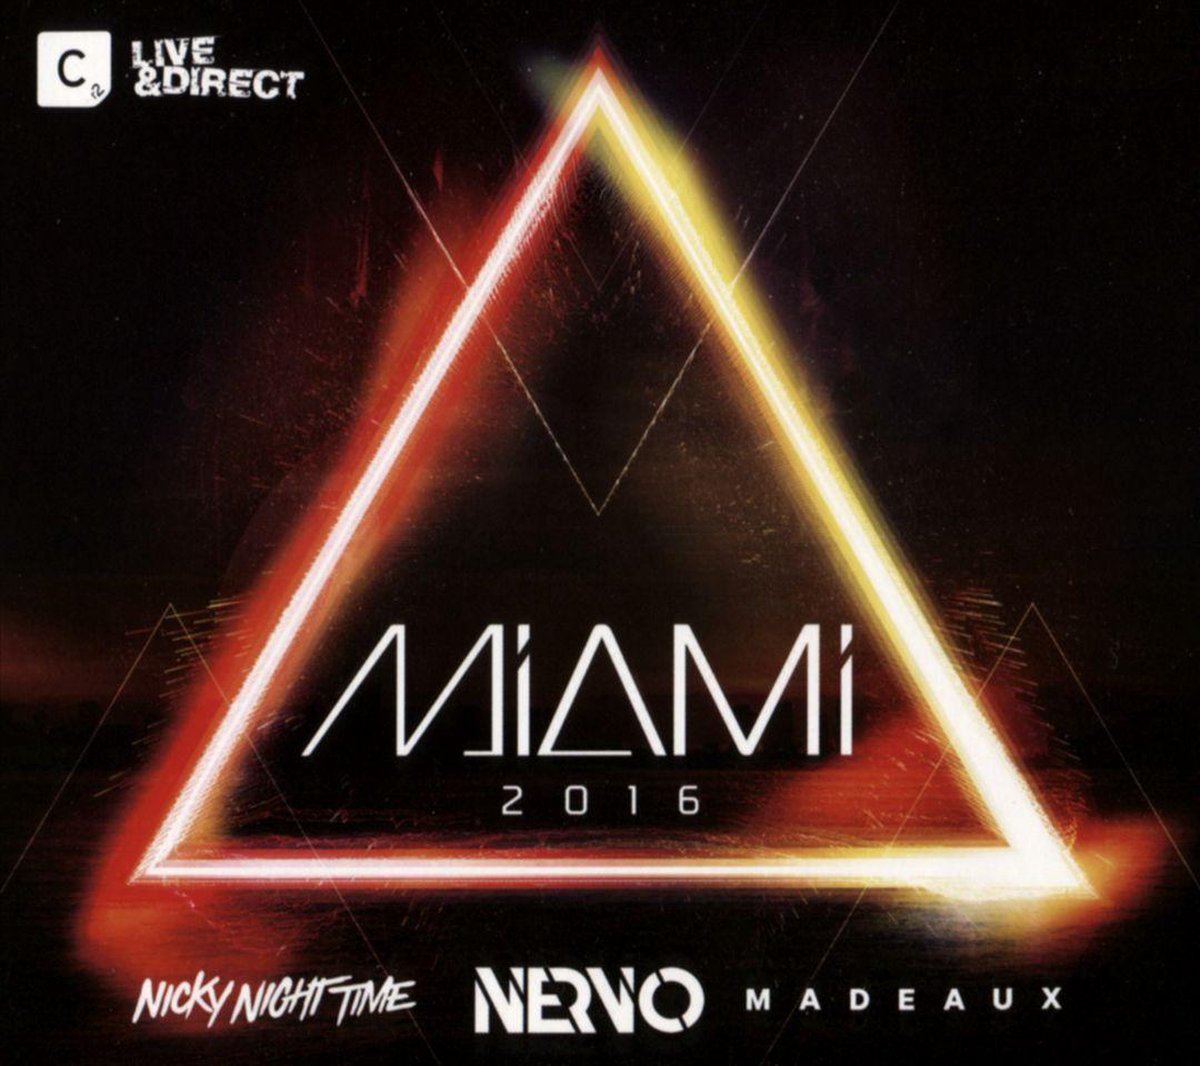 Various Mixed By Nervo Nicky Night - Miami 2016 - Various Mixed By Nervo Nicky Night